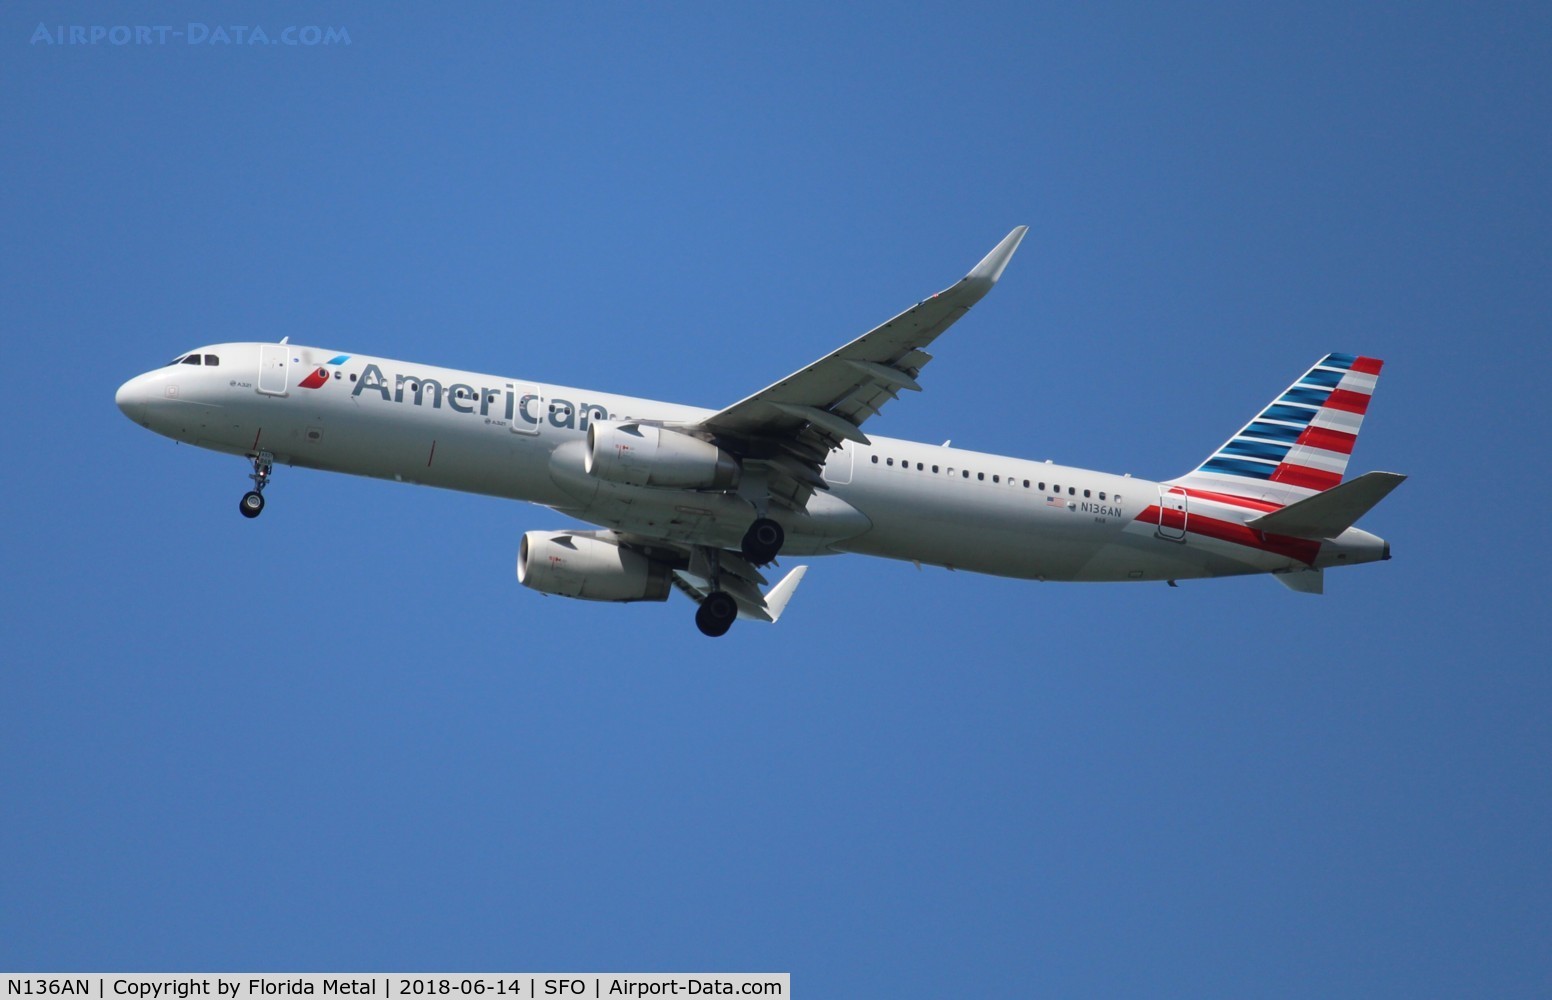 N136AN, 2015 Airbus A321-231 C/N 6532, American